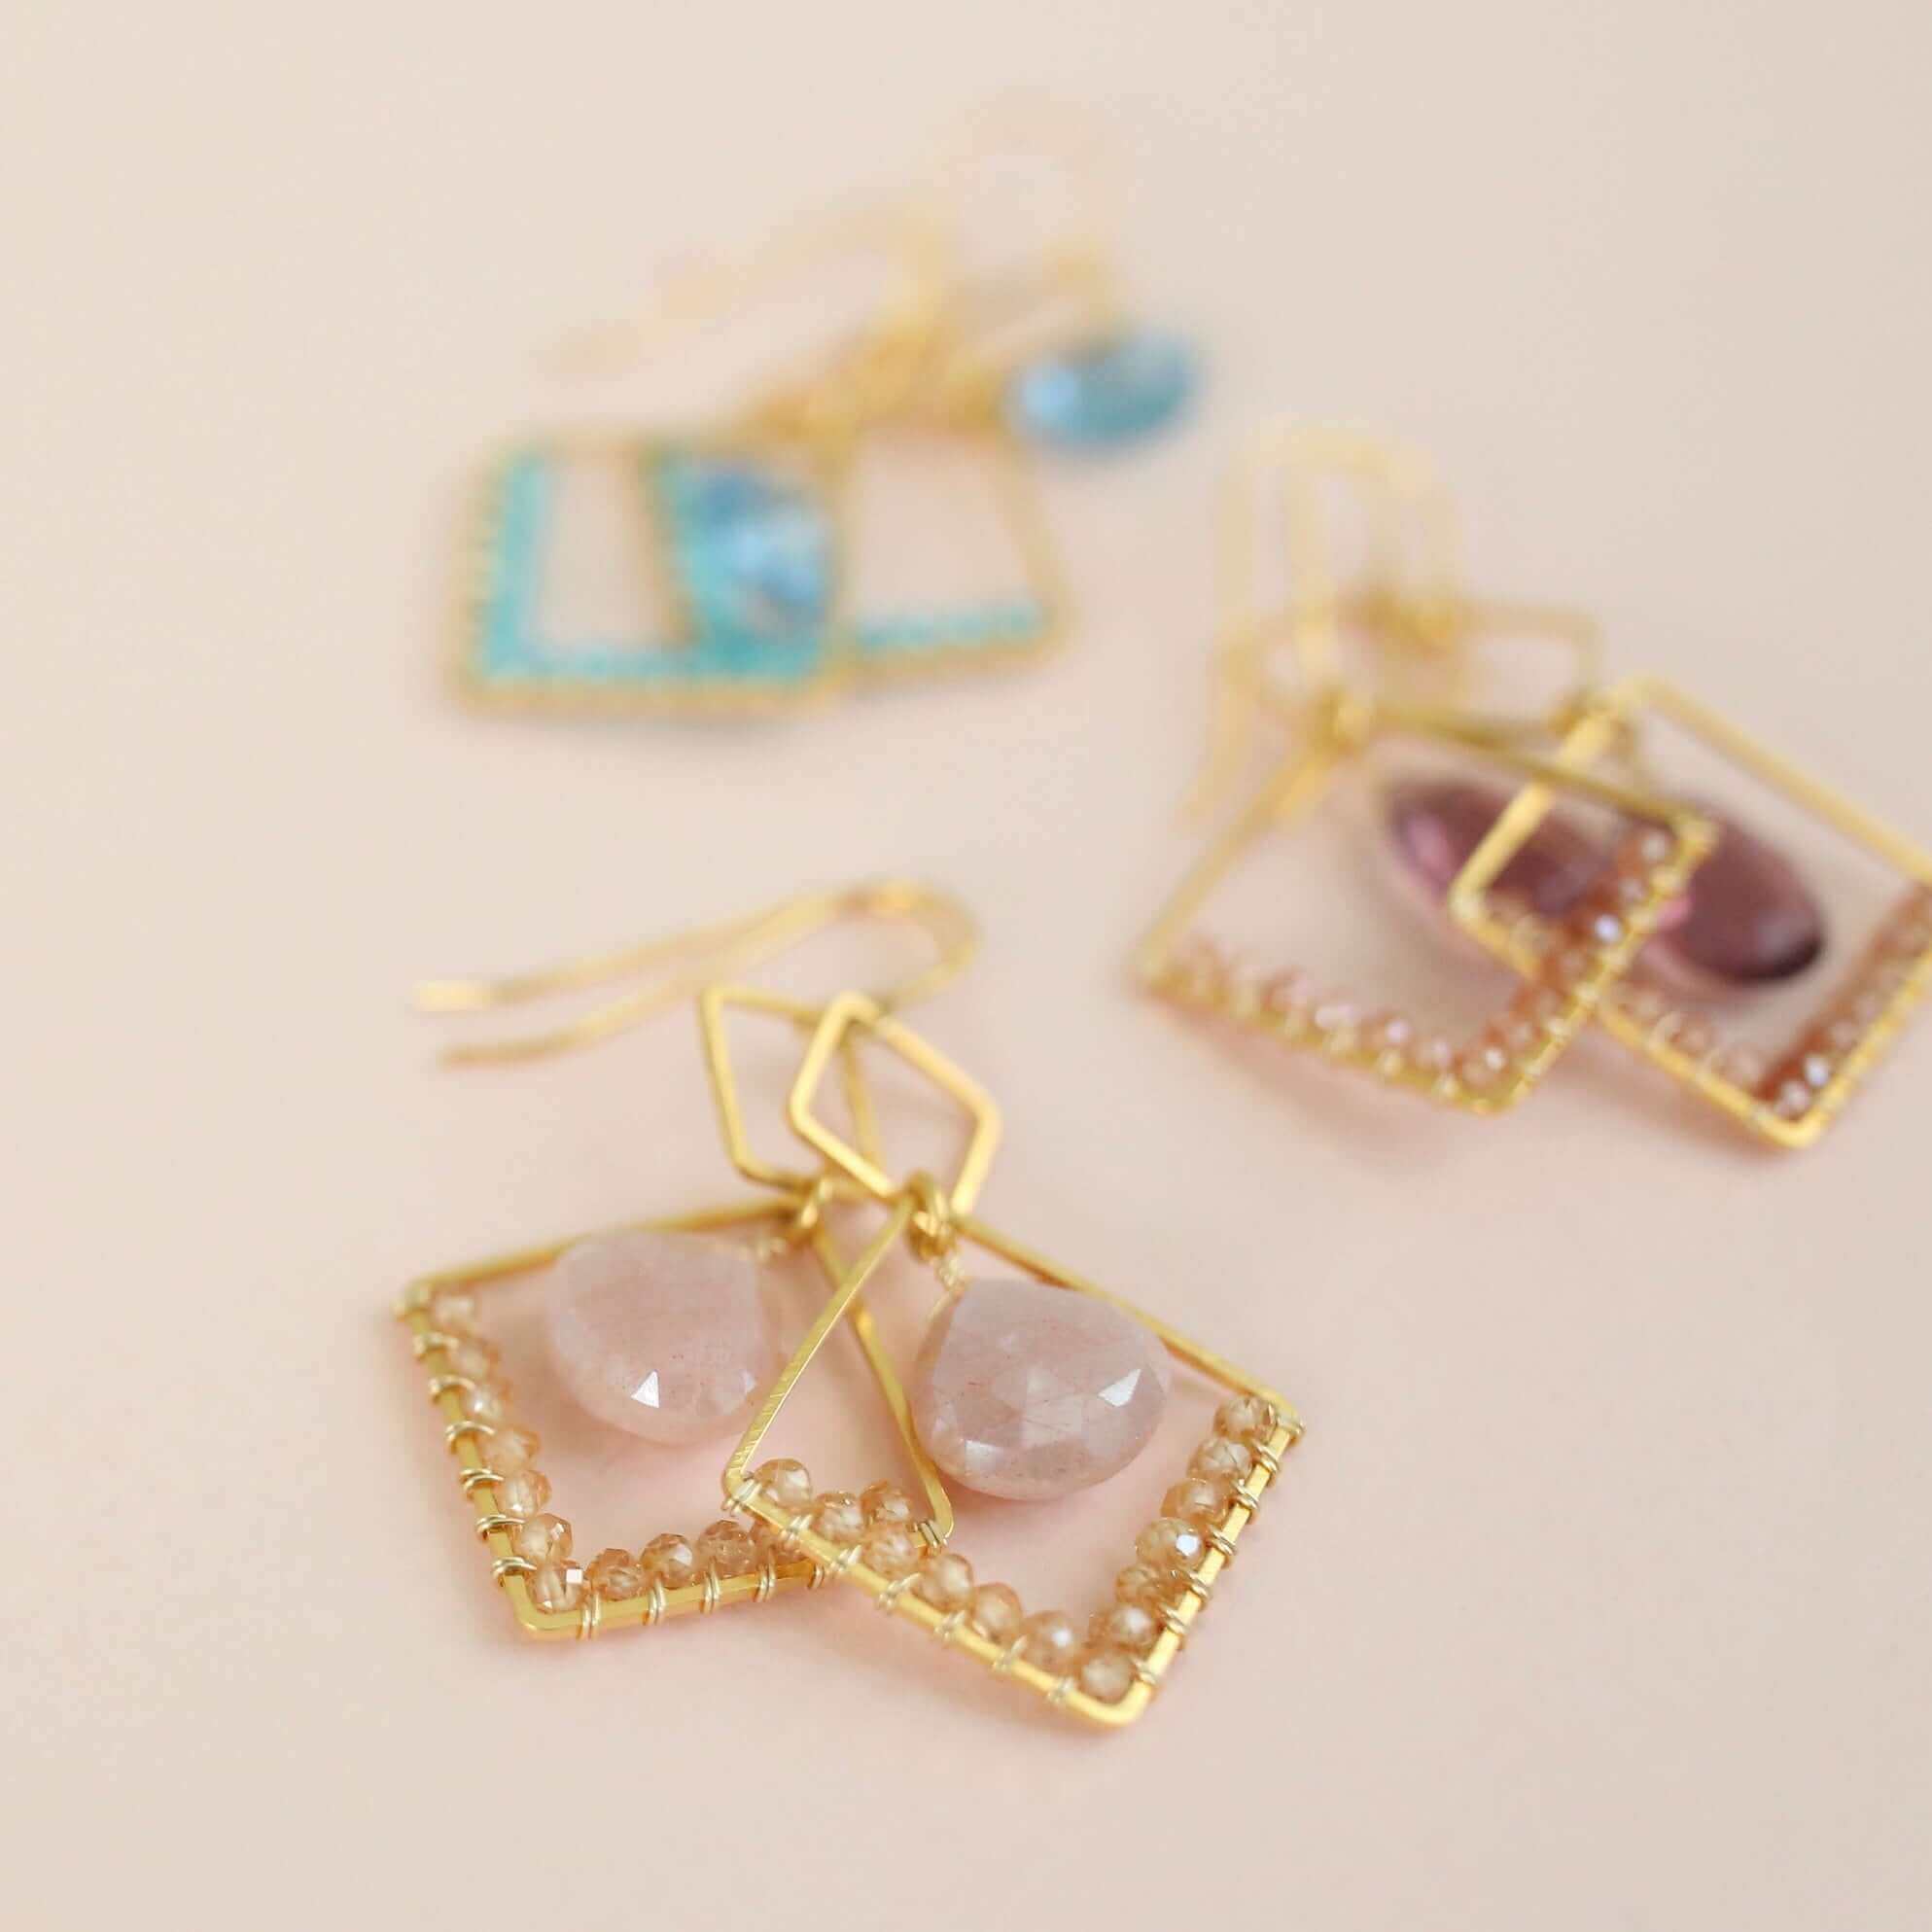 Gold geometric earrings with rhodolite garnet and champagne quartz gemstones